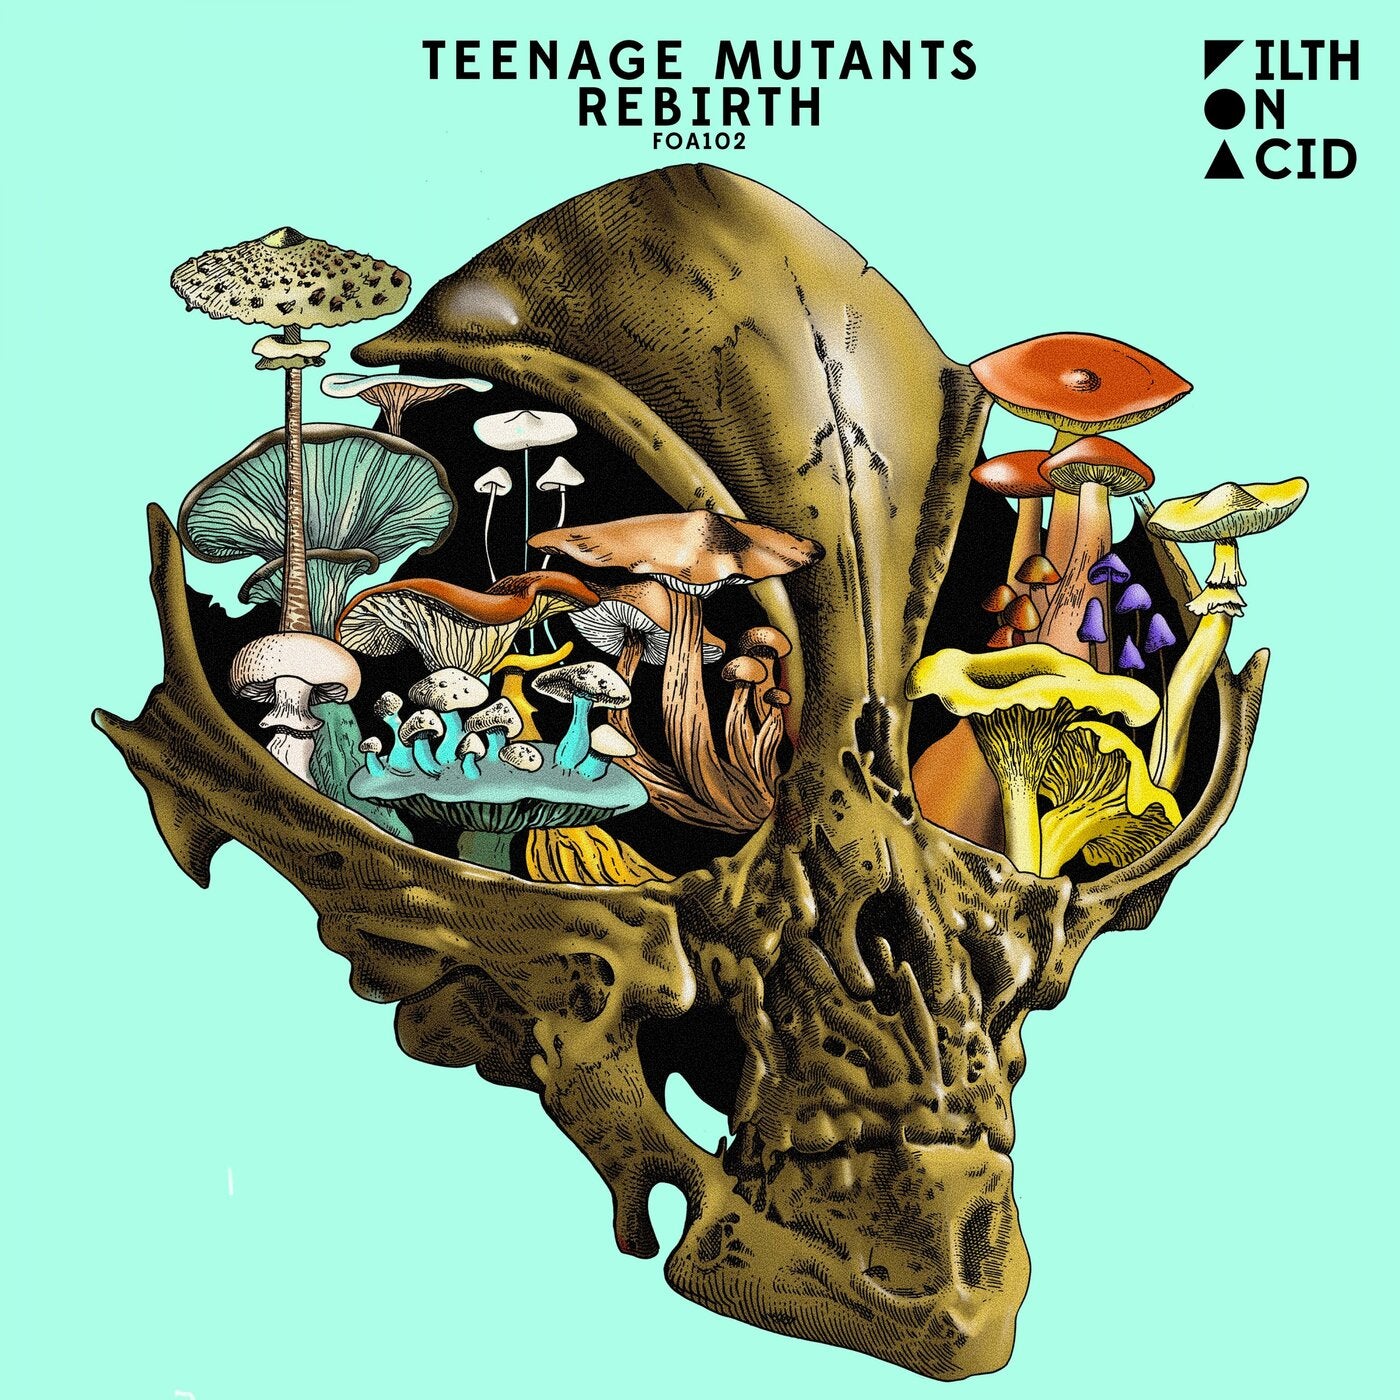 Teenage Mutants – Rebirth [FOA102]